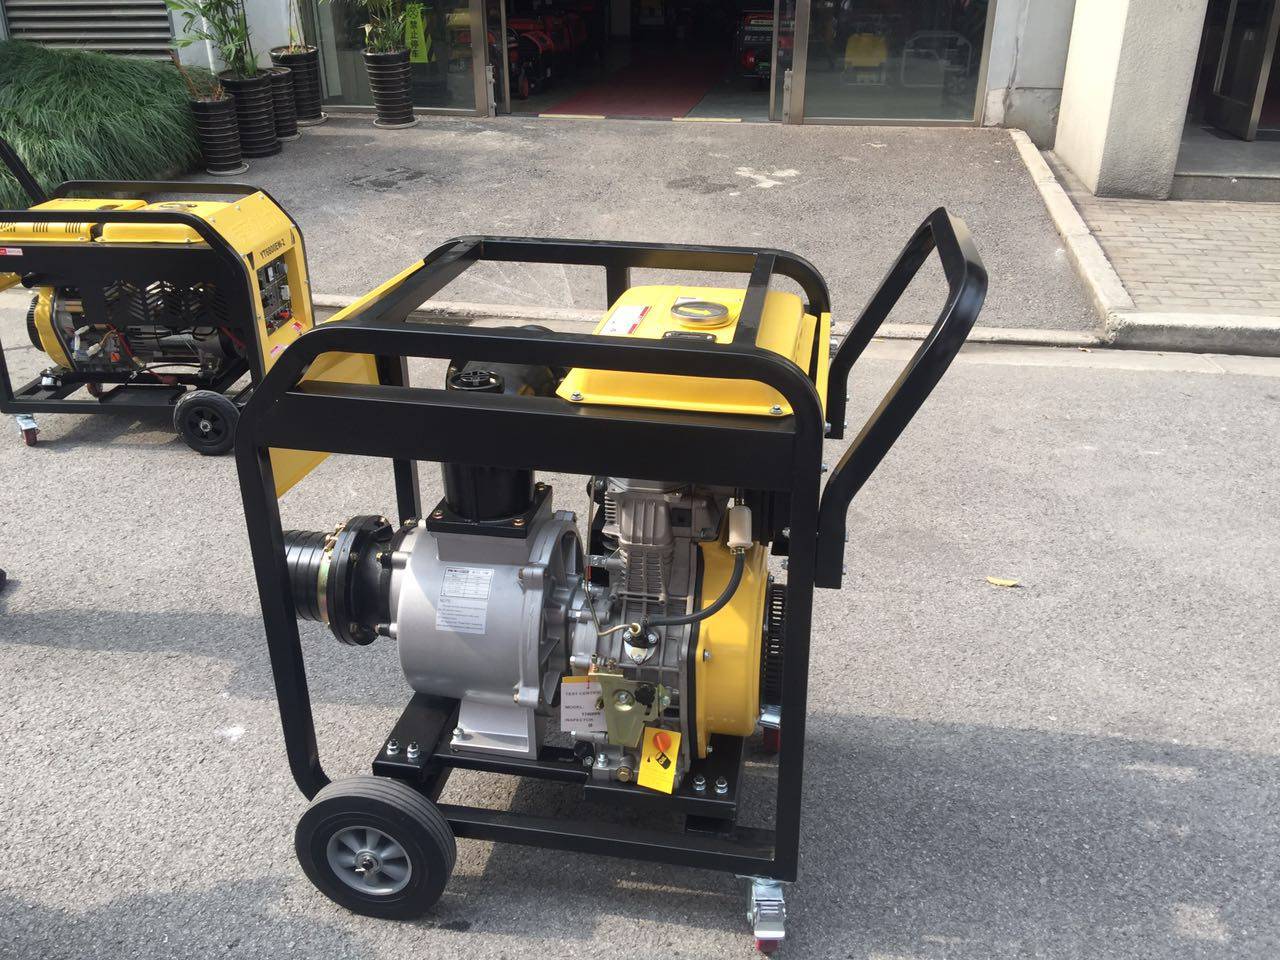 yt60dpe移动式带轮子柴油抽水泵6寸,还有一款4寸柴油机高压泵型号为